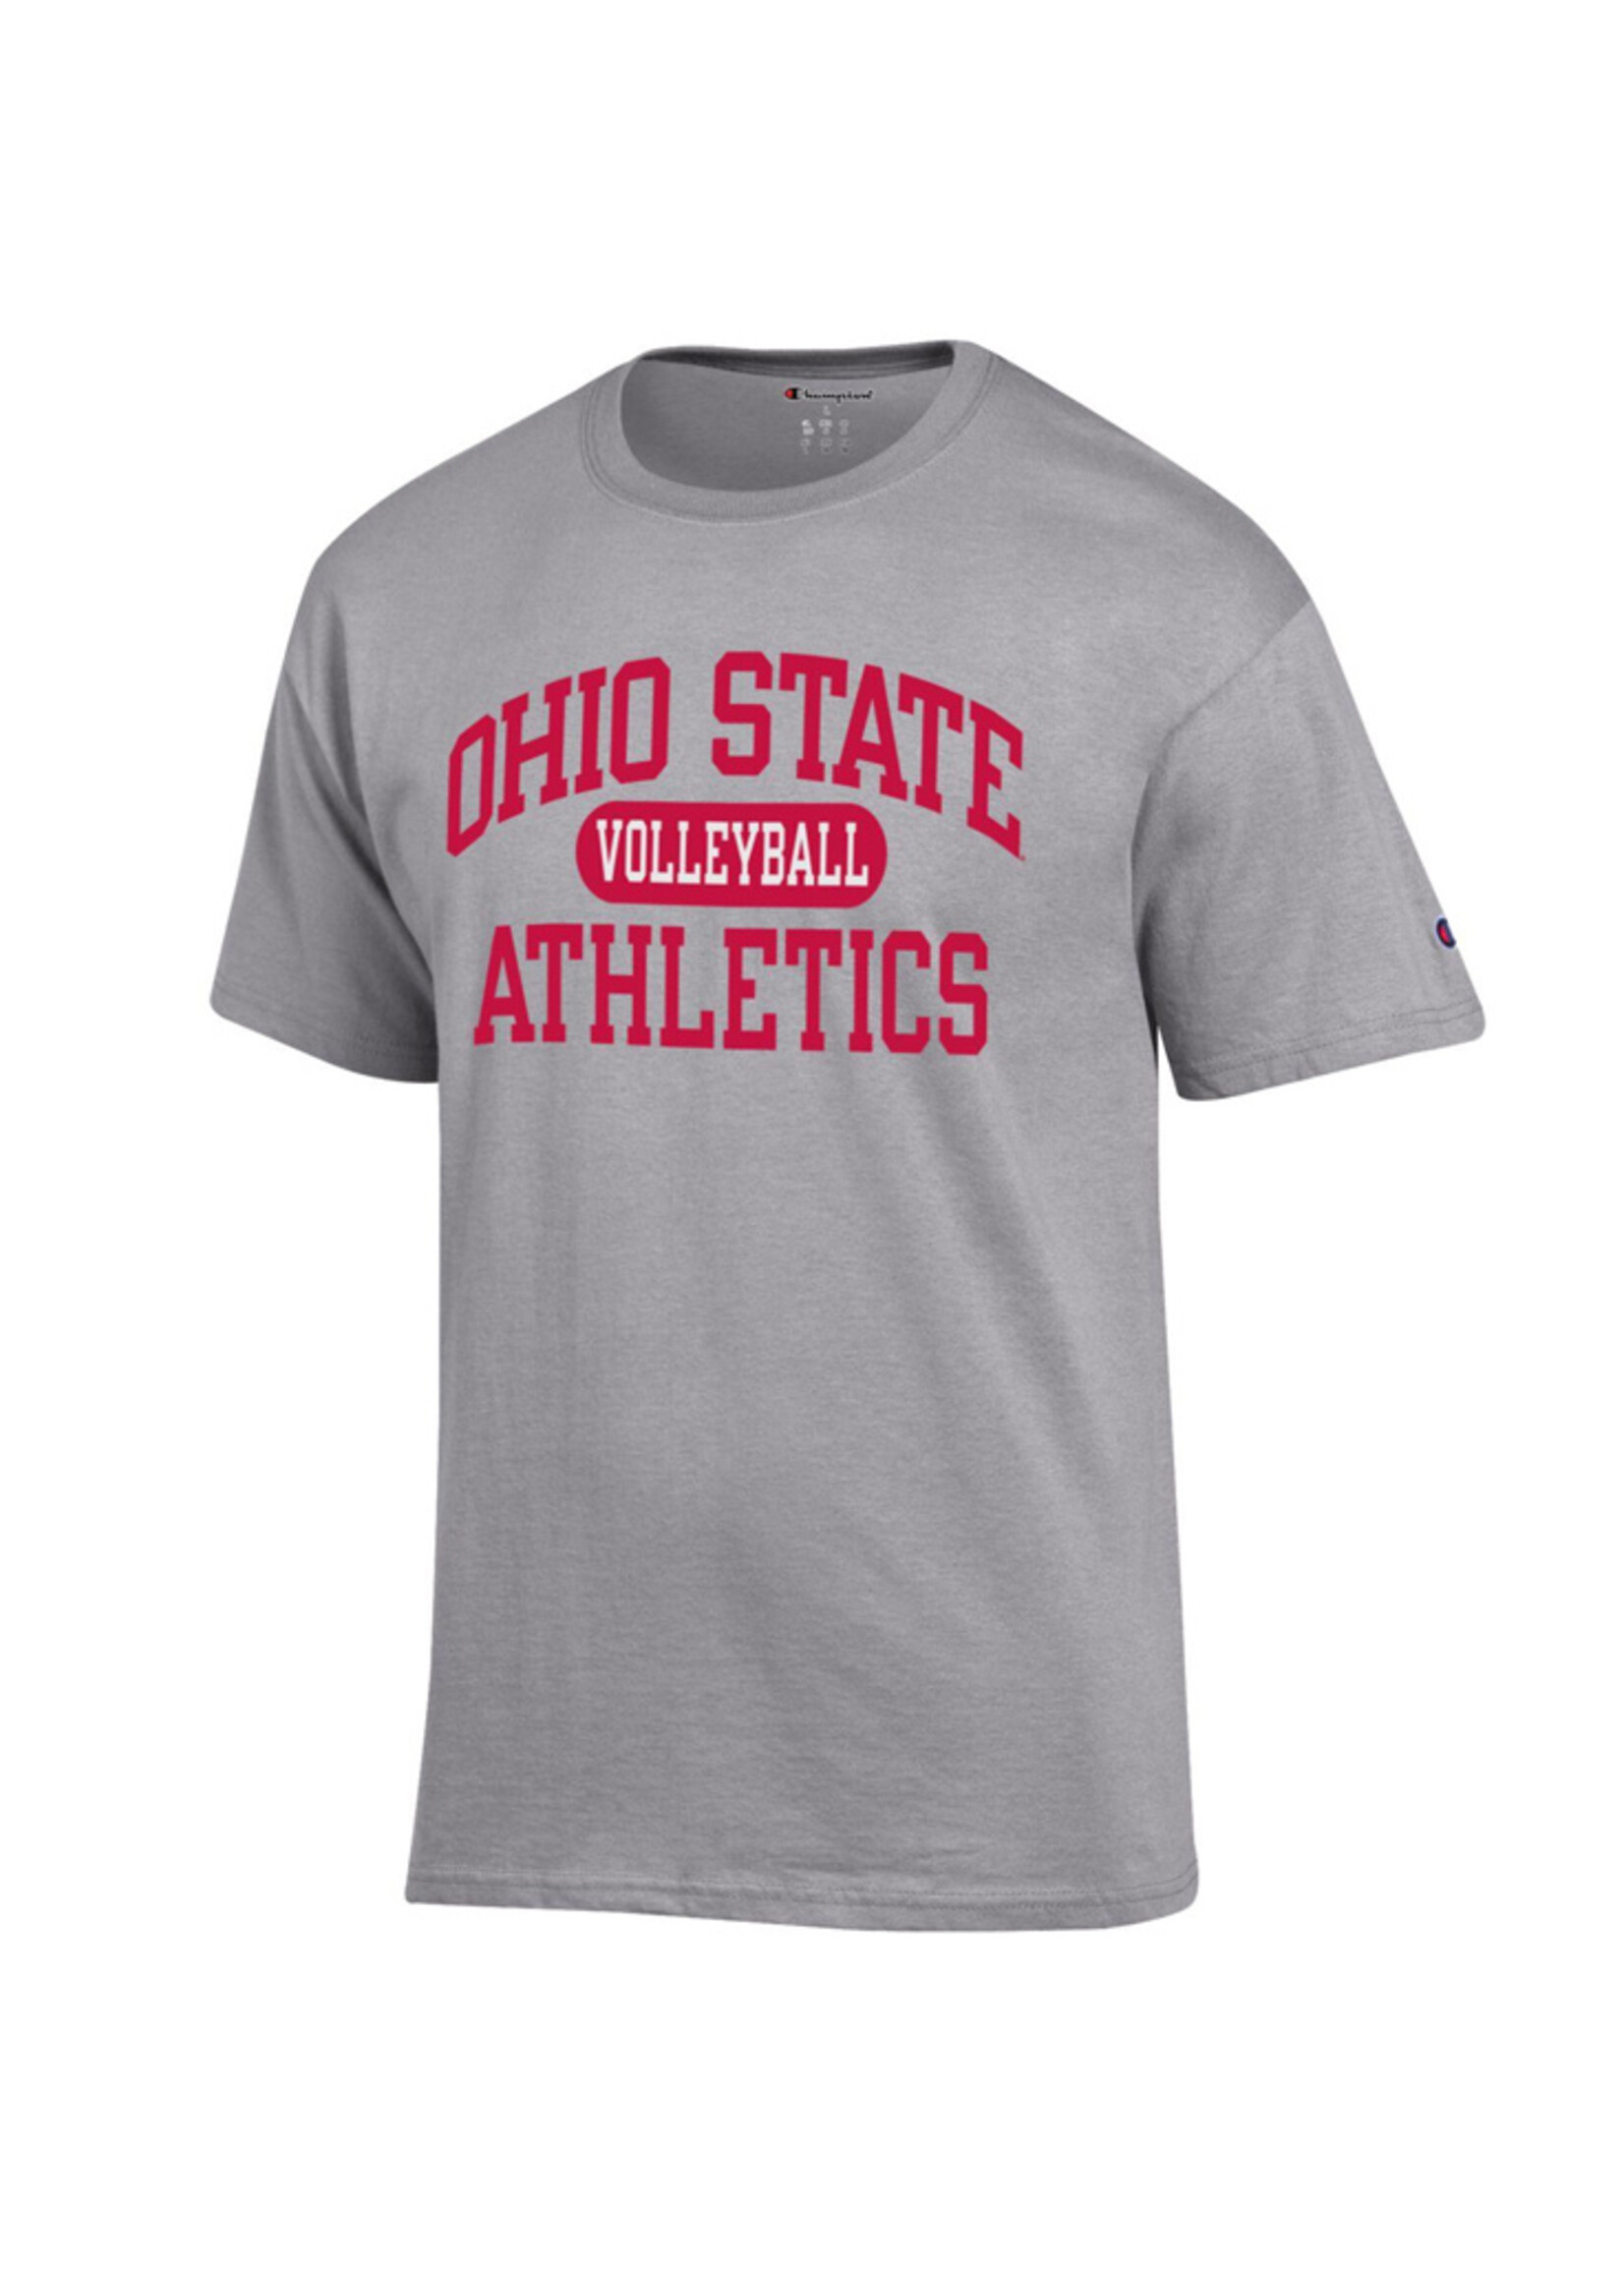 Ohio State Buckeyes Volleyball T-Shirt